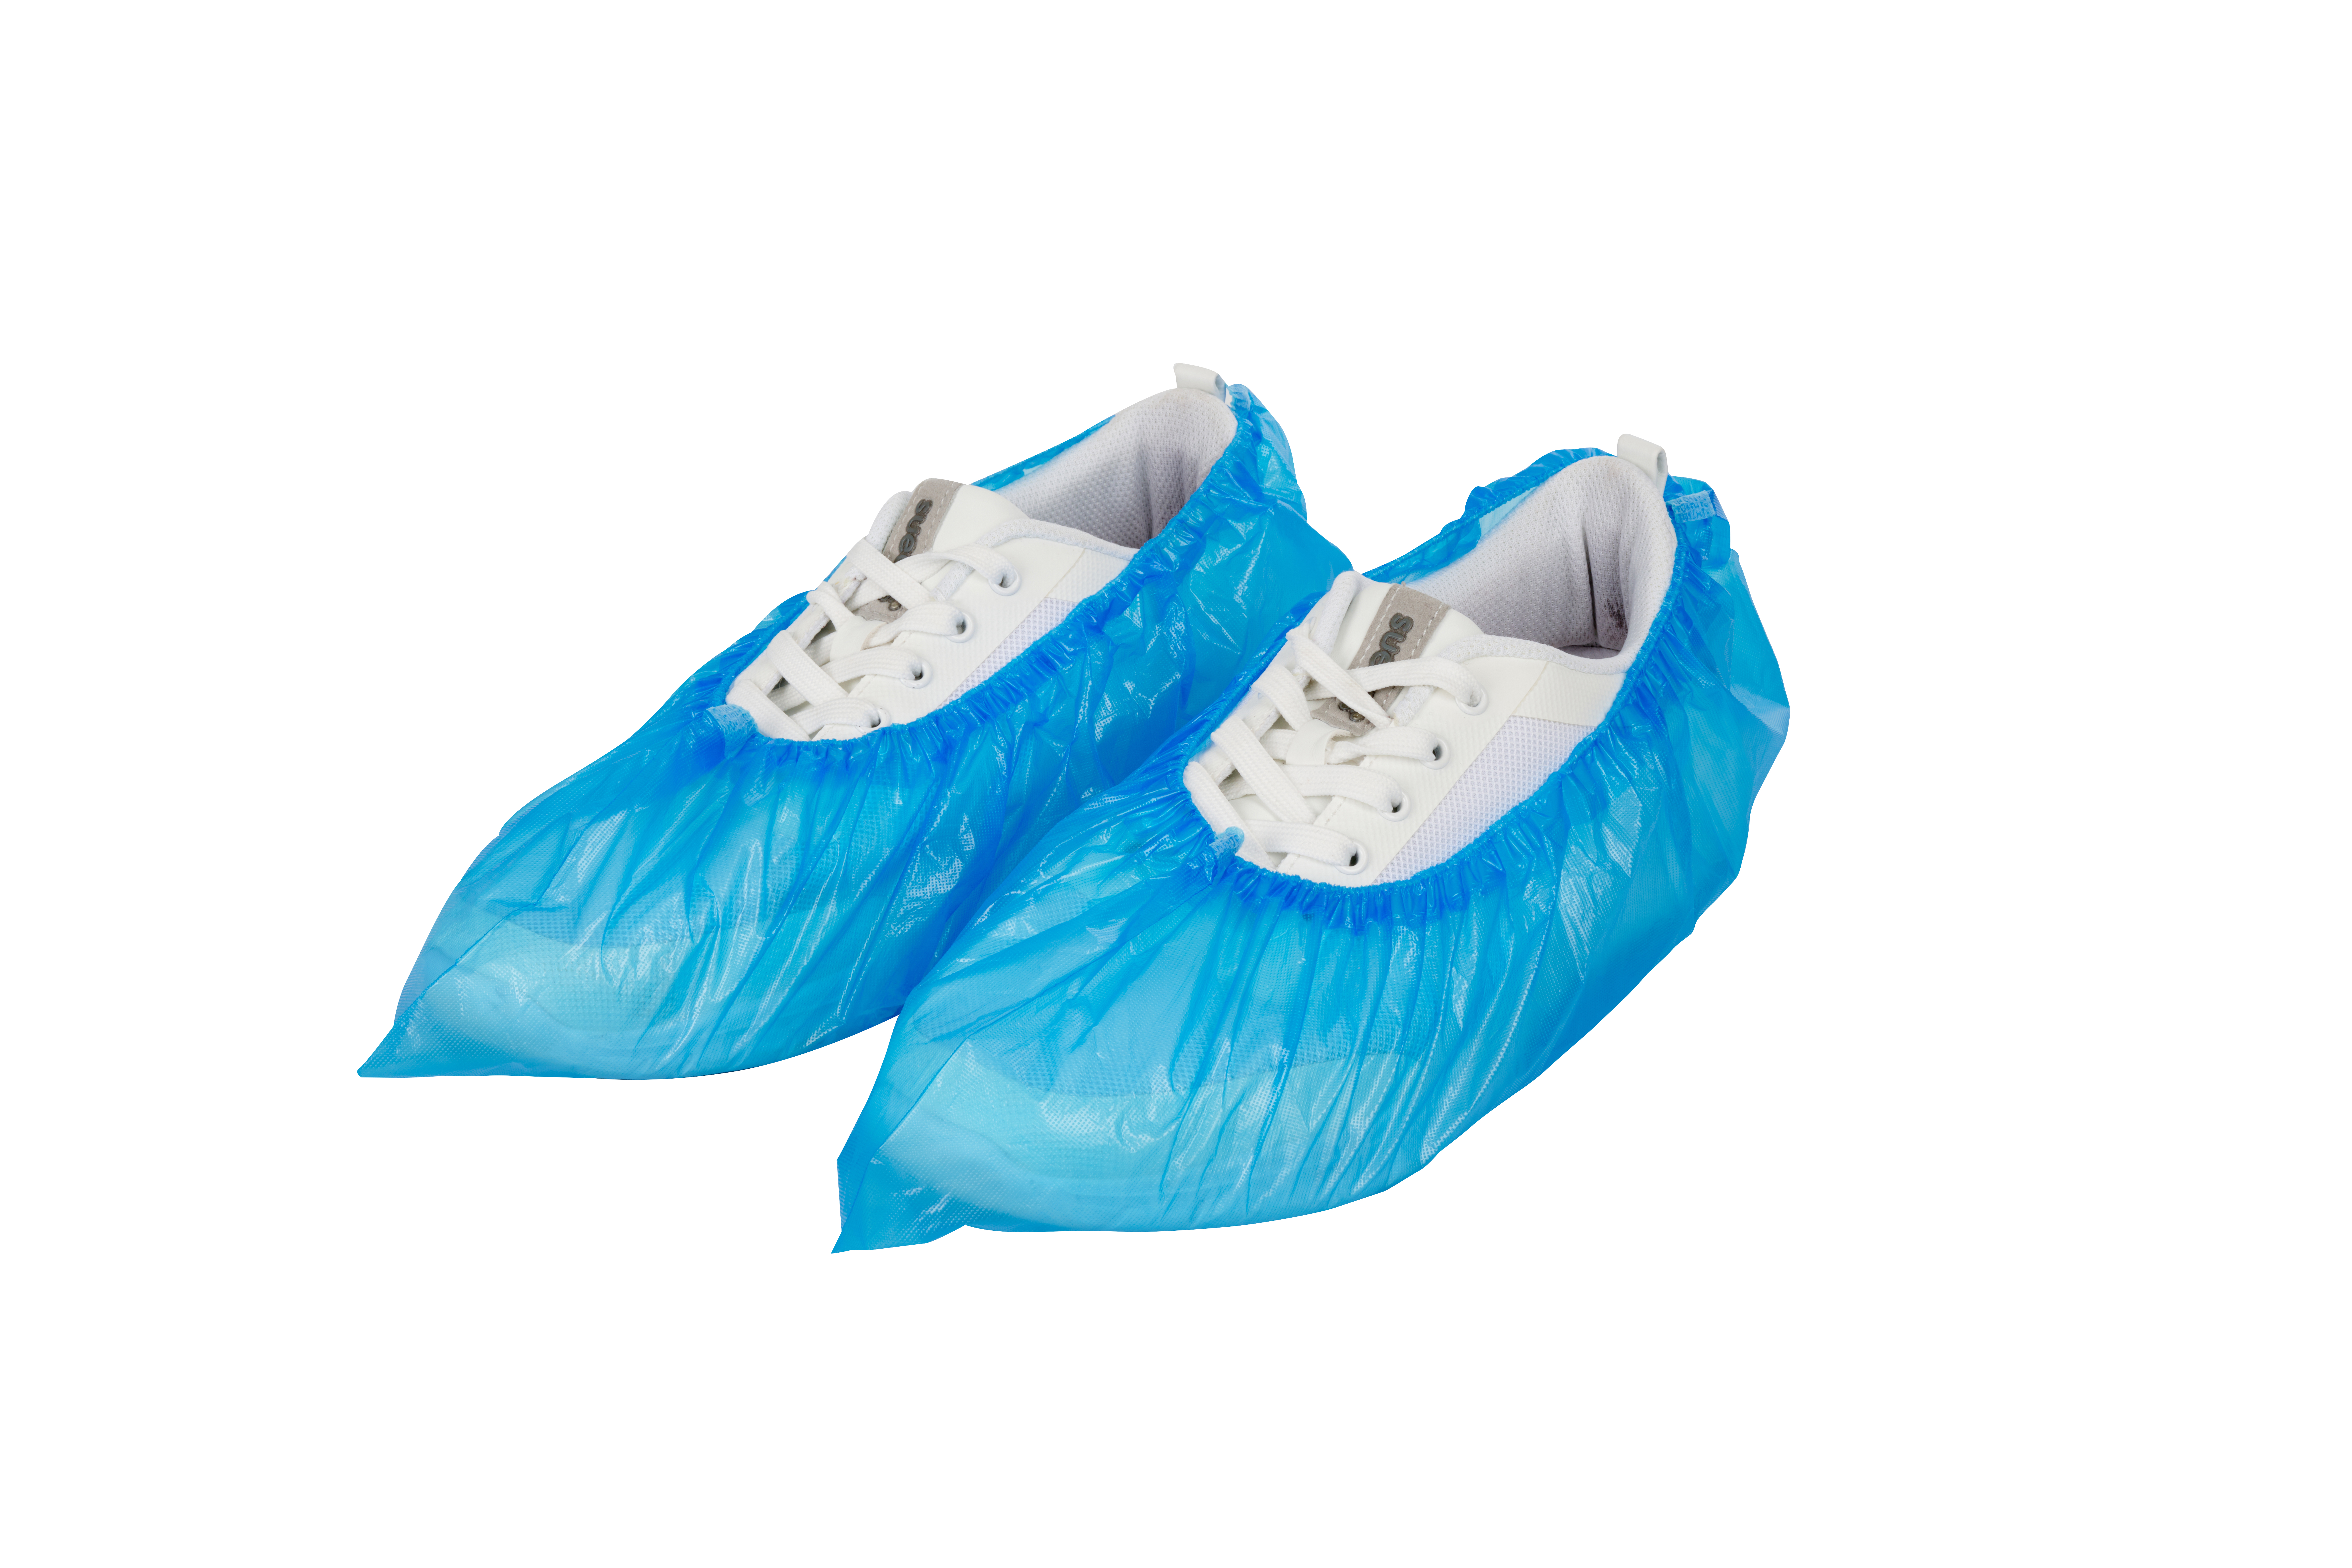 KRUUSE Disposable shoe covers, blue, 70/pk
